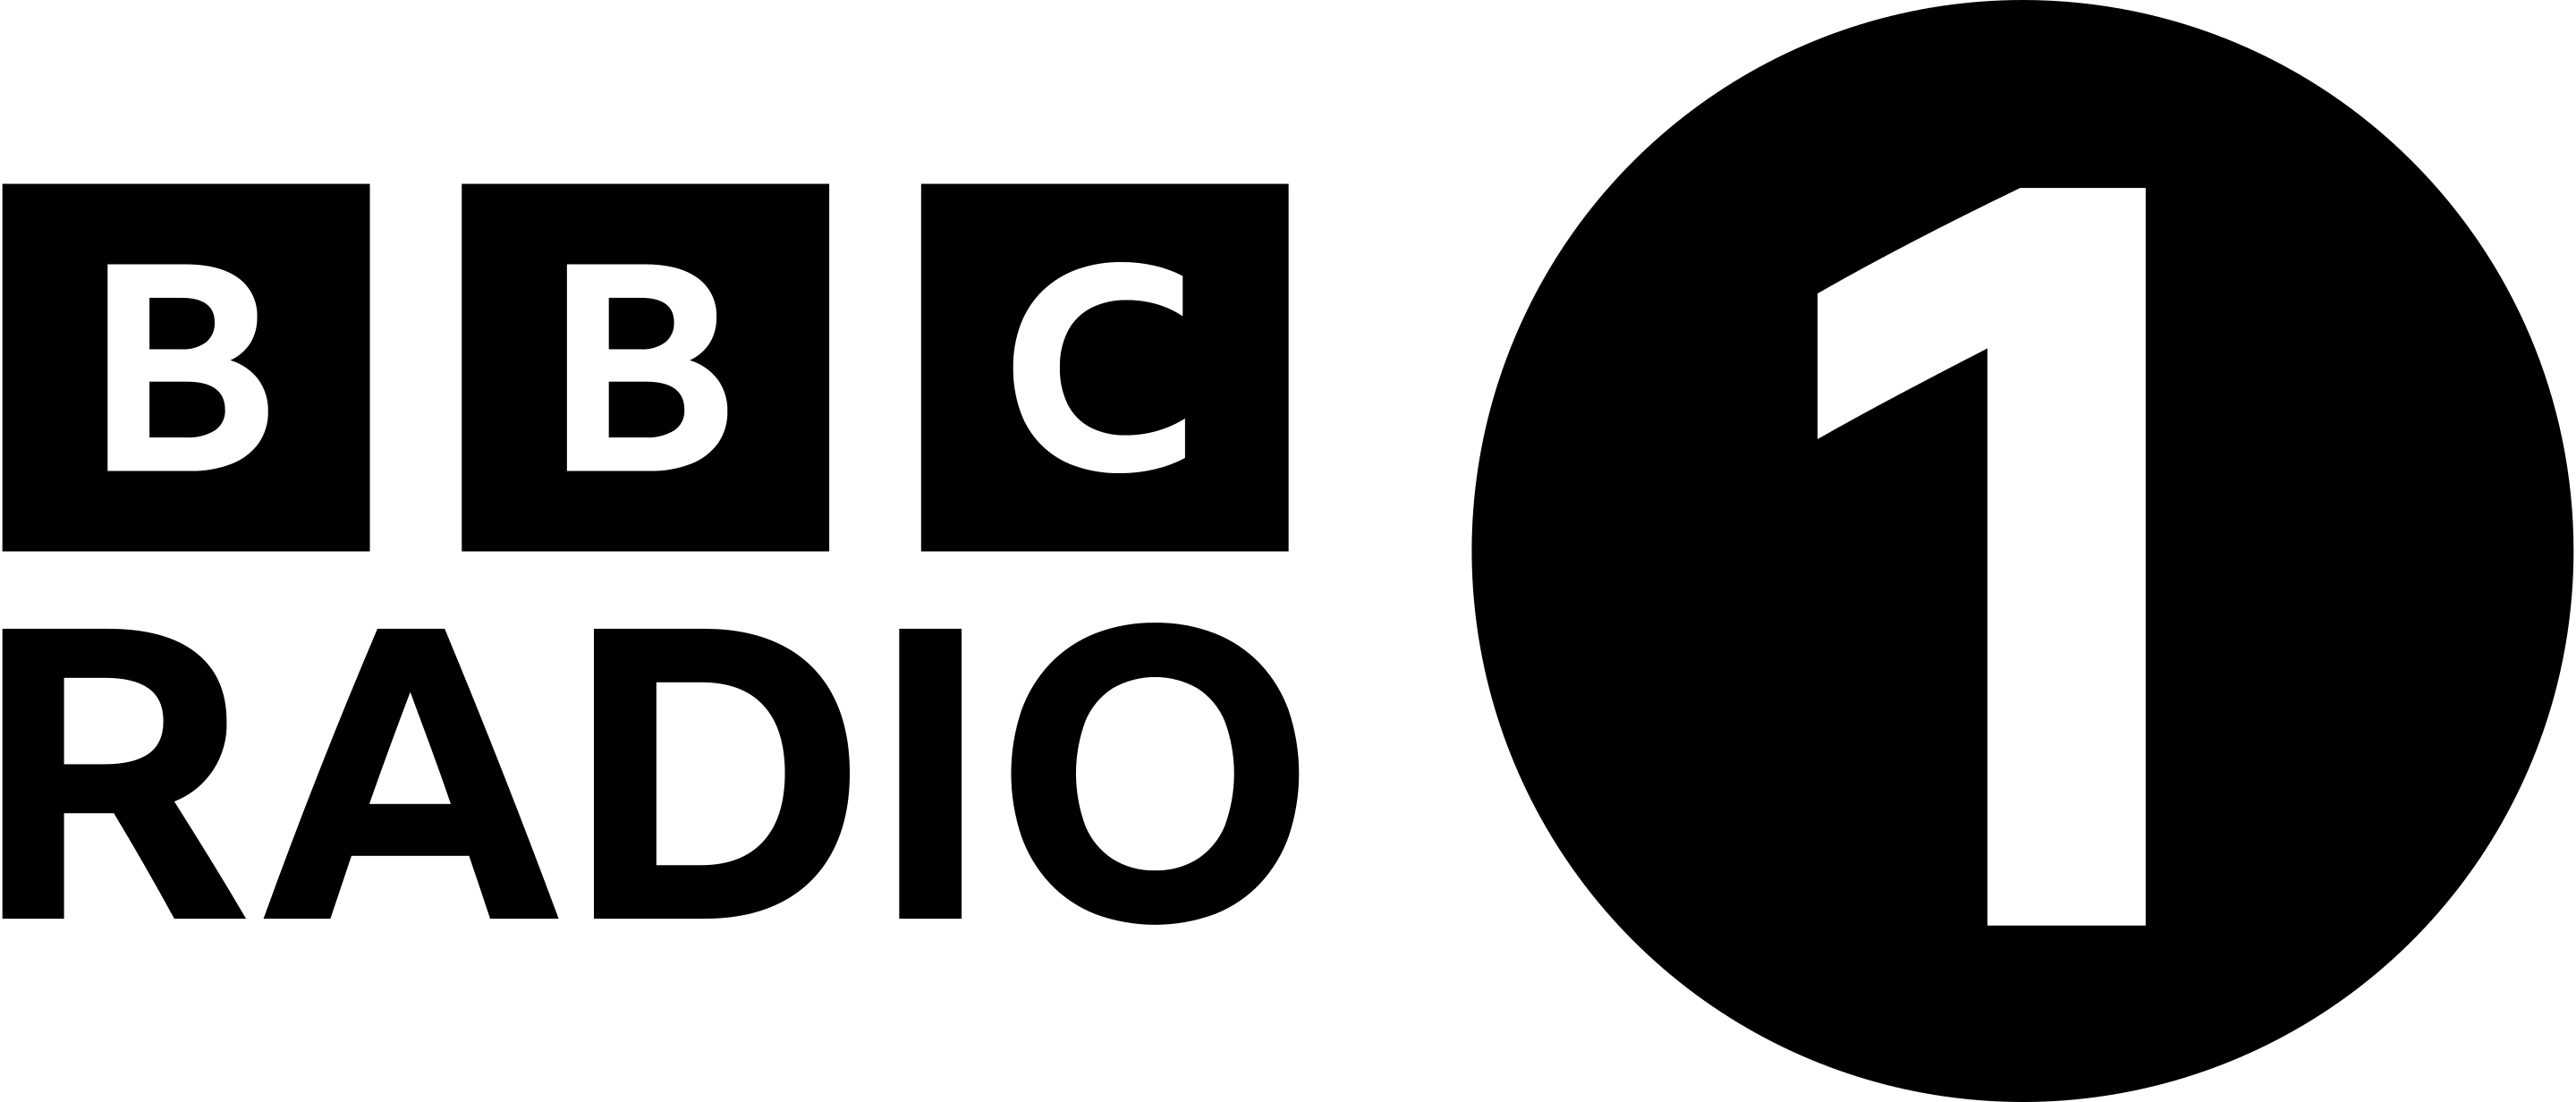 BBC Radio 1 : une initiative pour soutenir les futurs animateurs